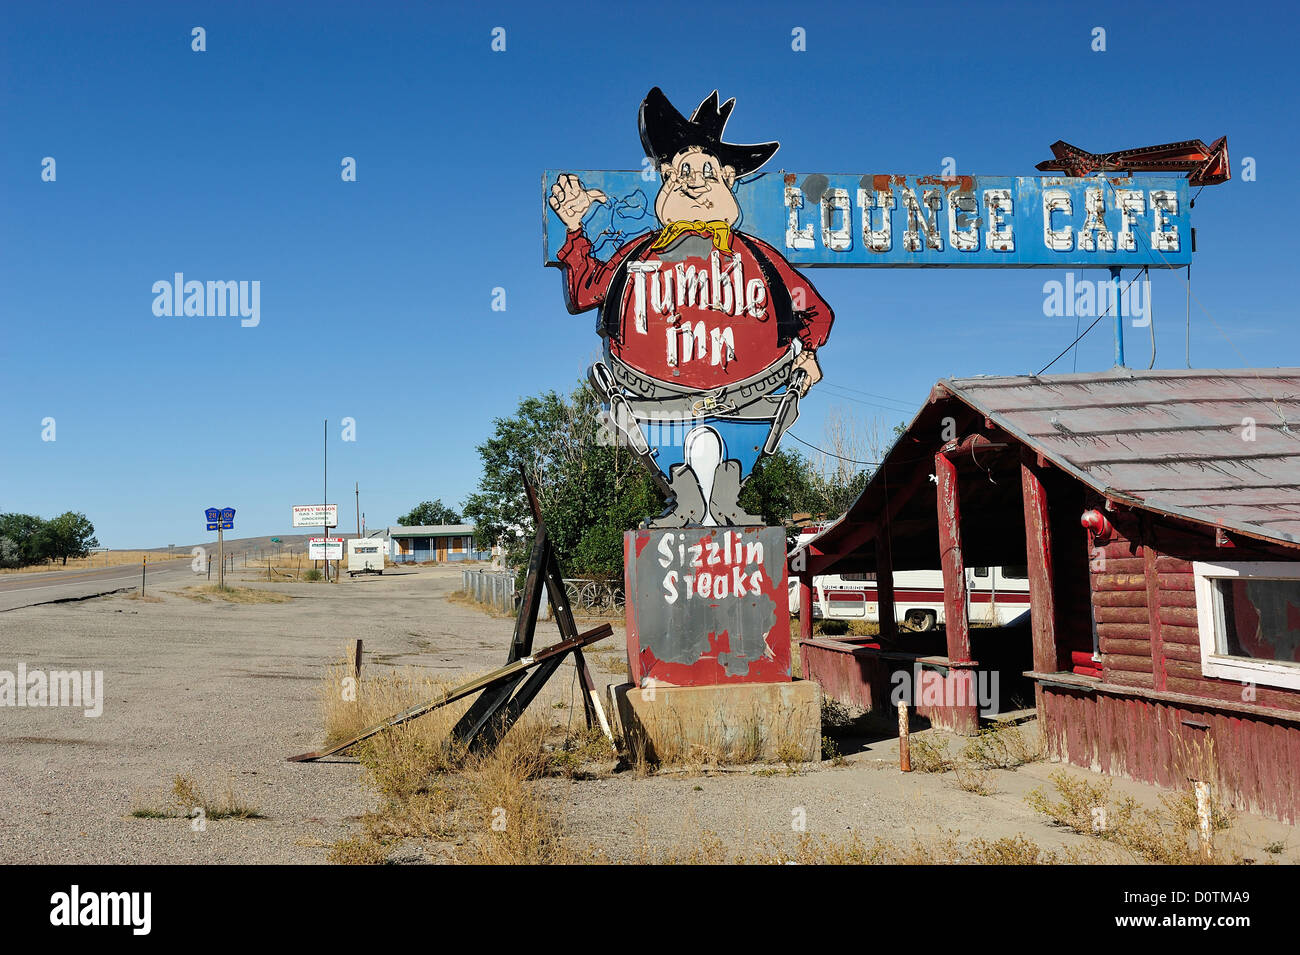 American, West, abbandonato cafe, Americana, decadenza, città fantasma, lounge cafe, rurale autostrada, a vuoto Foto Stock